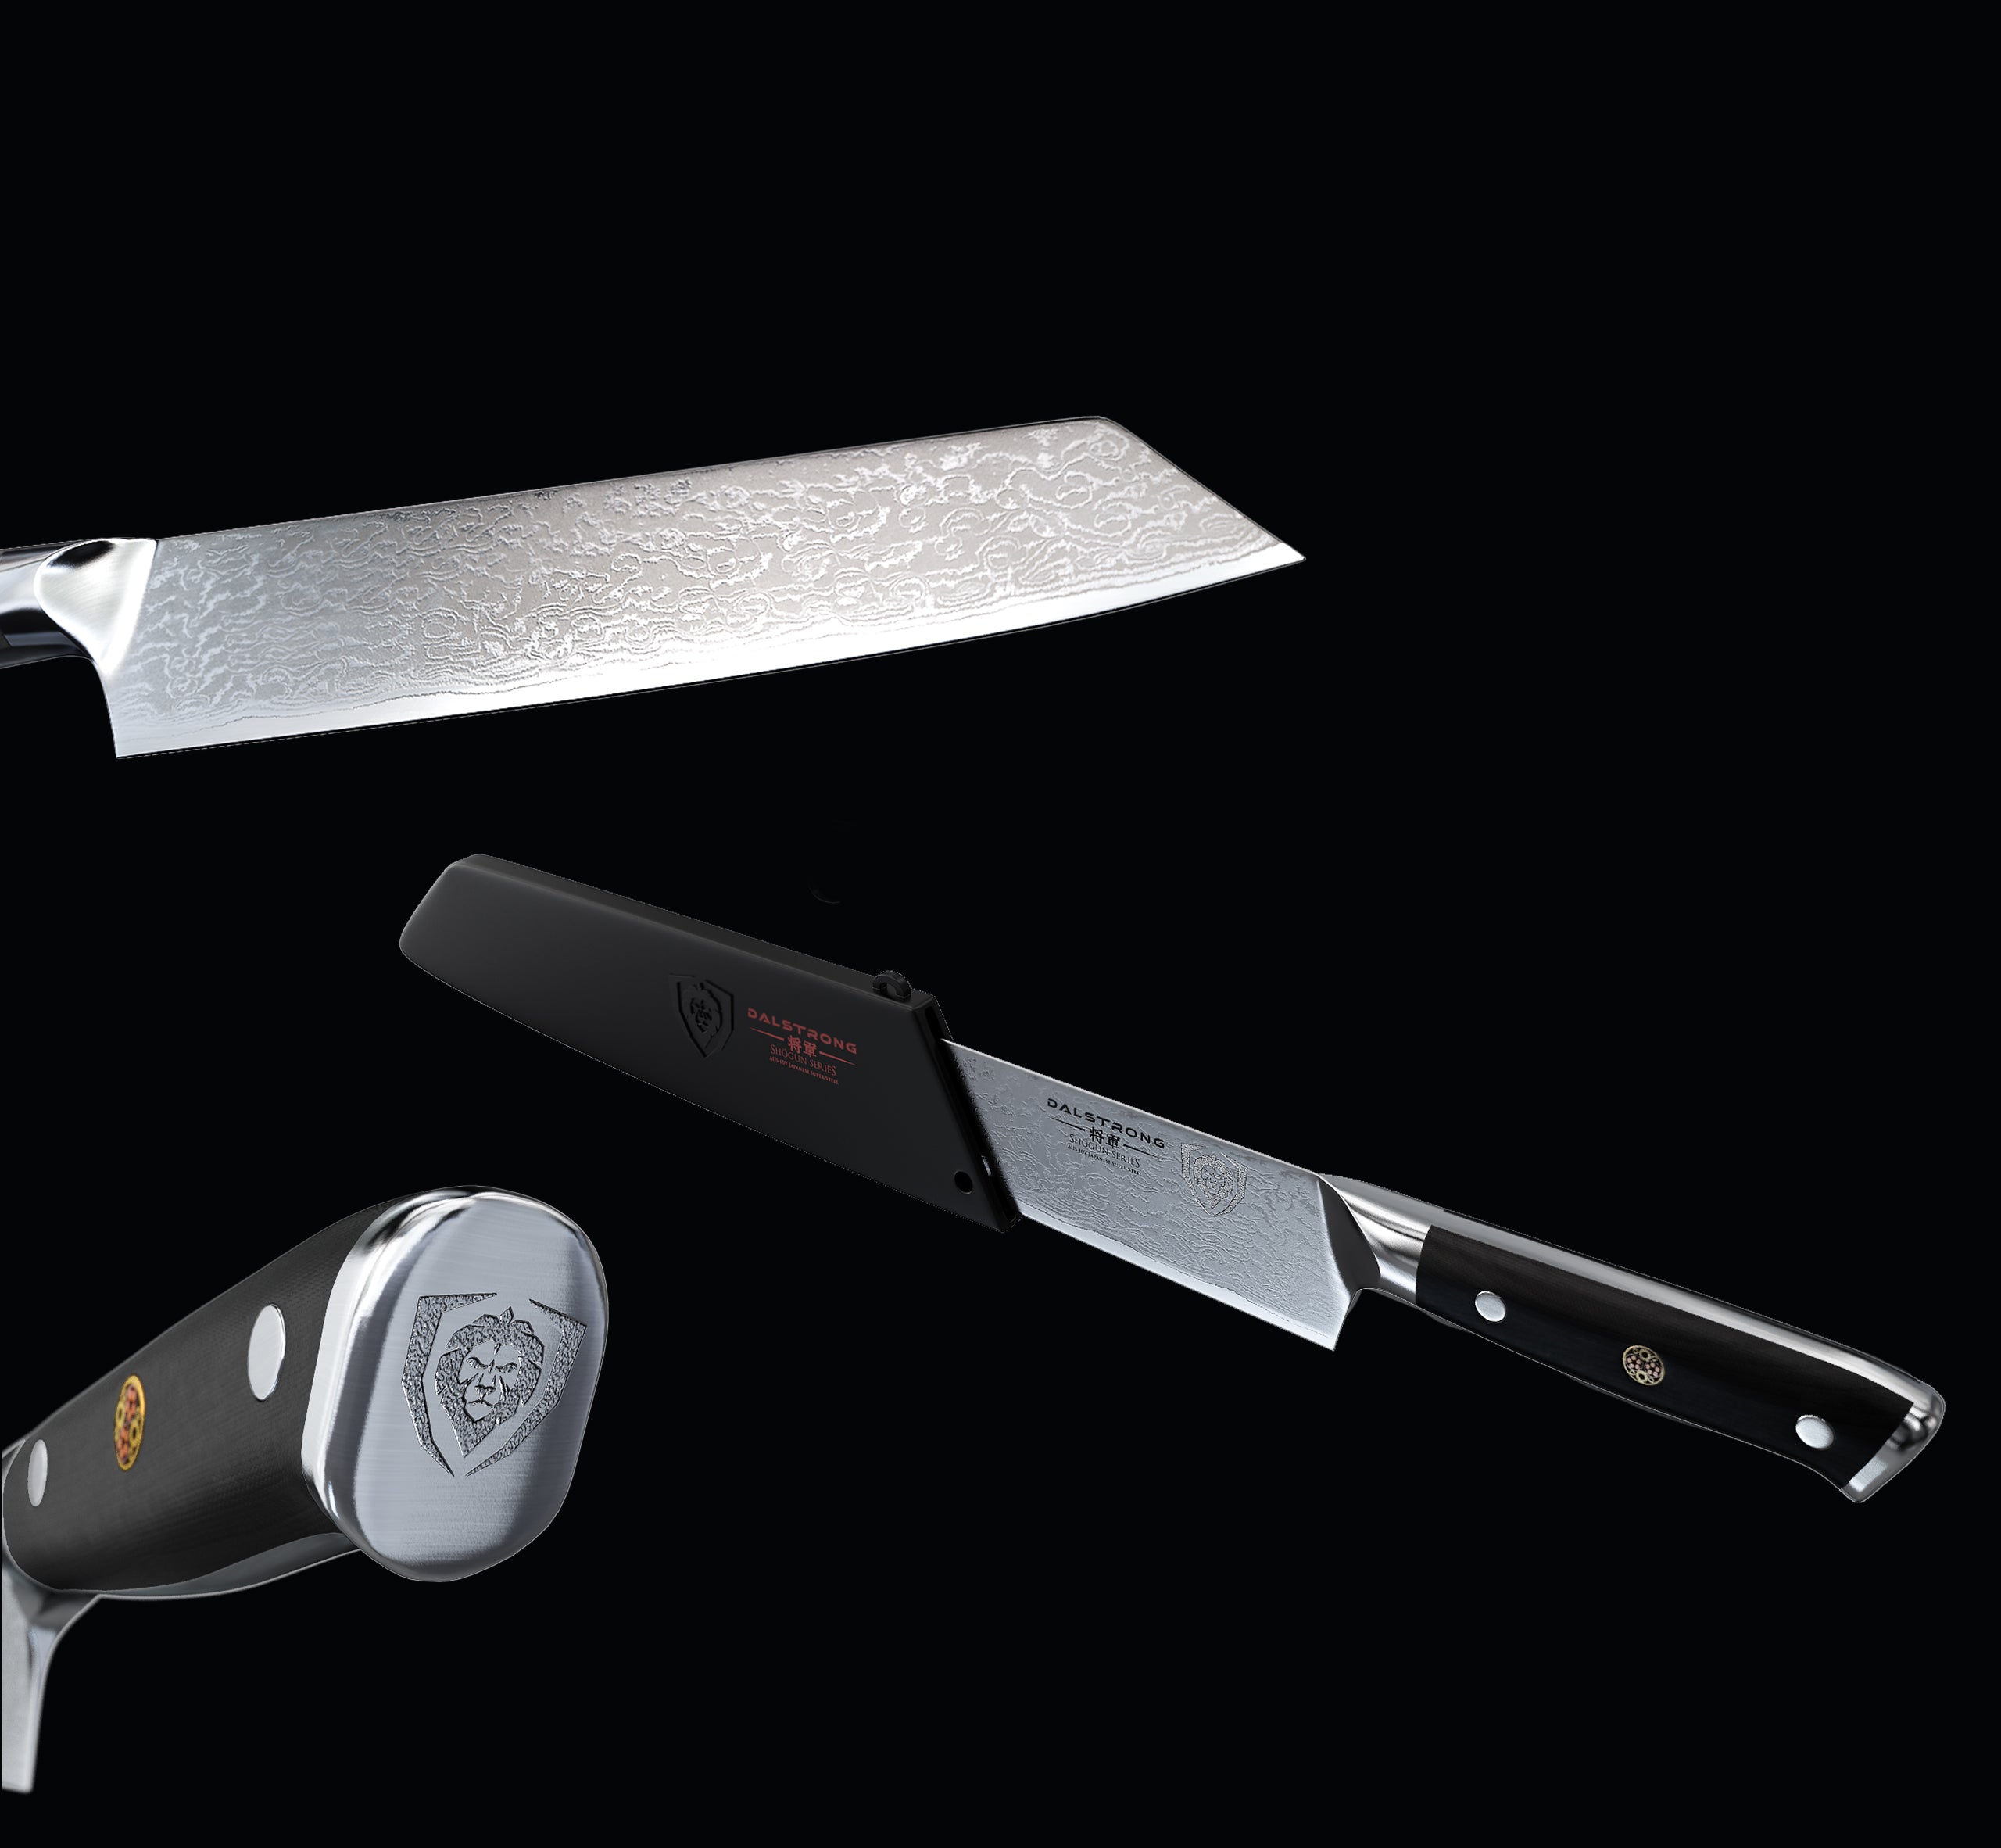 Dalstrong Chef Knife - Shogun Series Gyuto - VG10 - 9.5 240mm